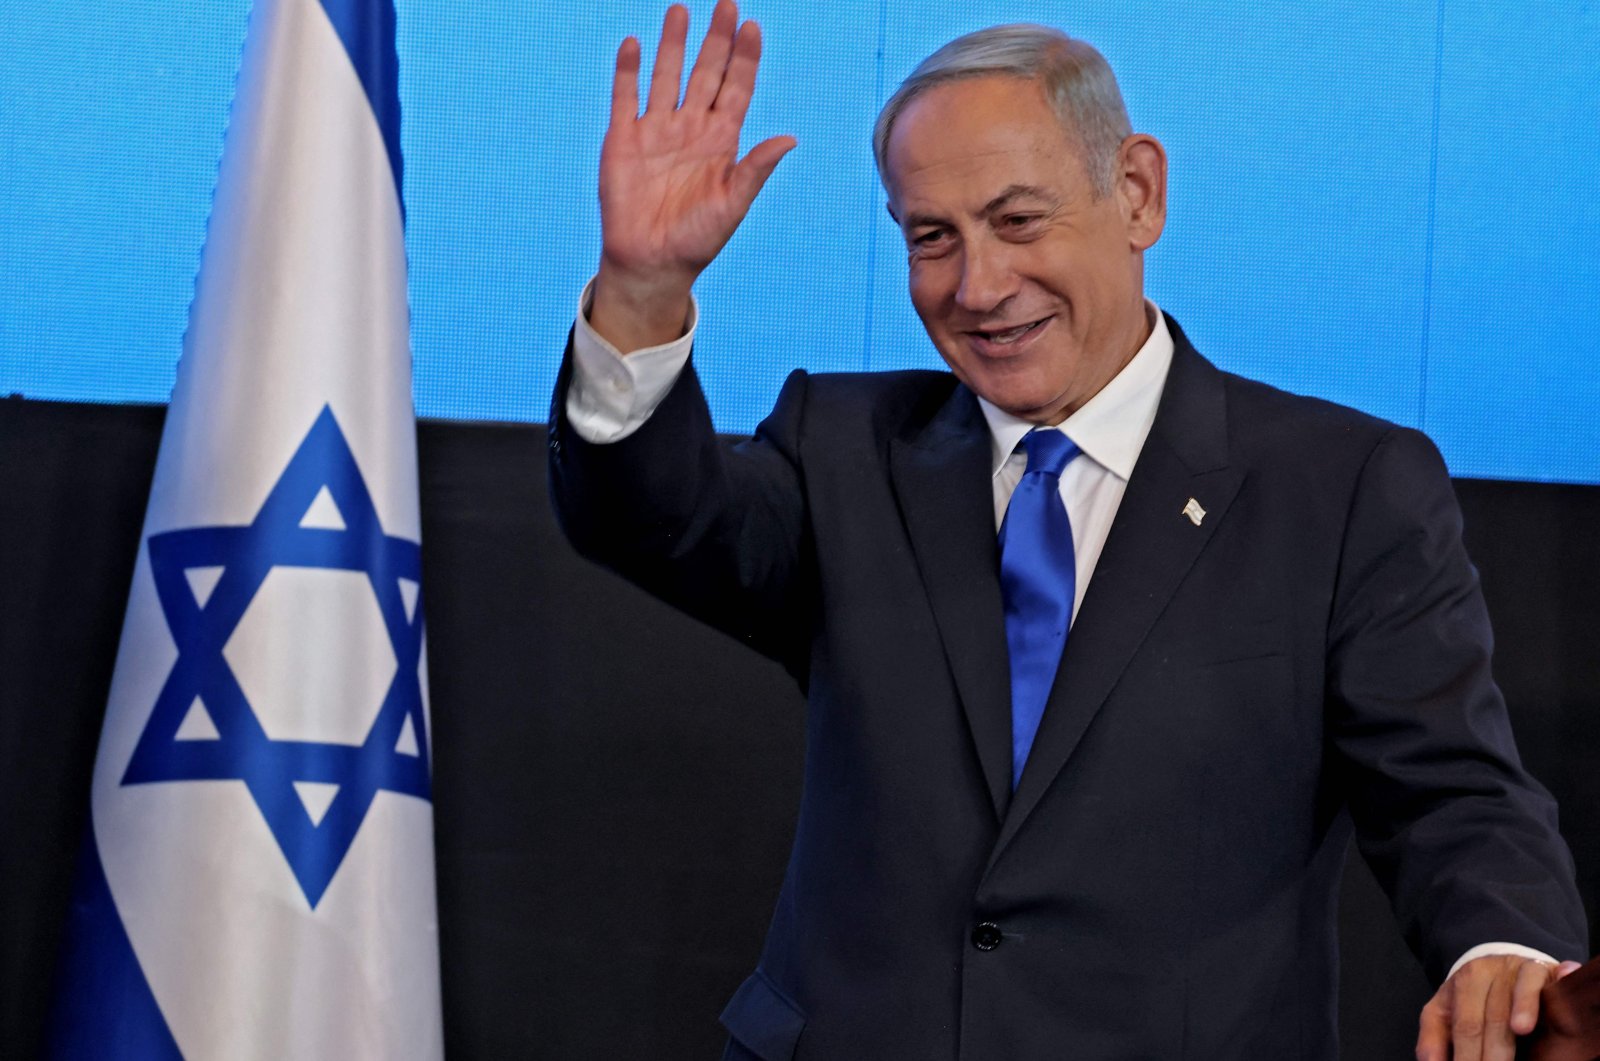 Penghitungan awal menempatkan Netanyahu di puncak kemenangan dalam jajak pendapat Israel